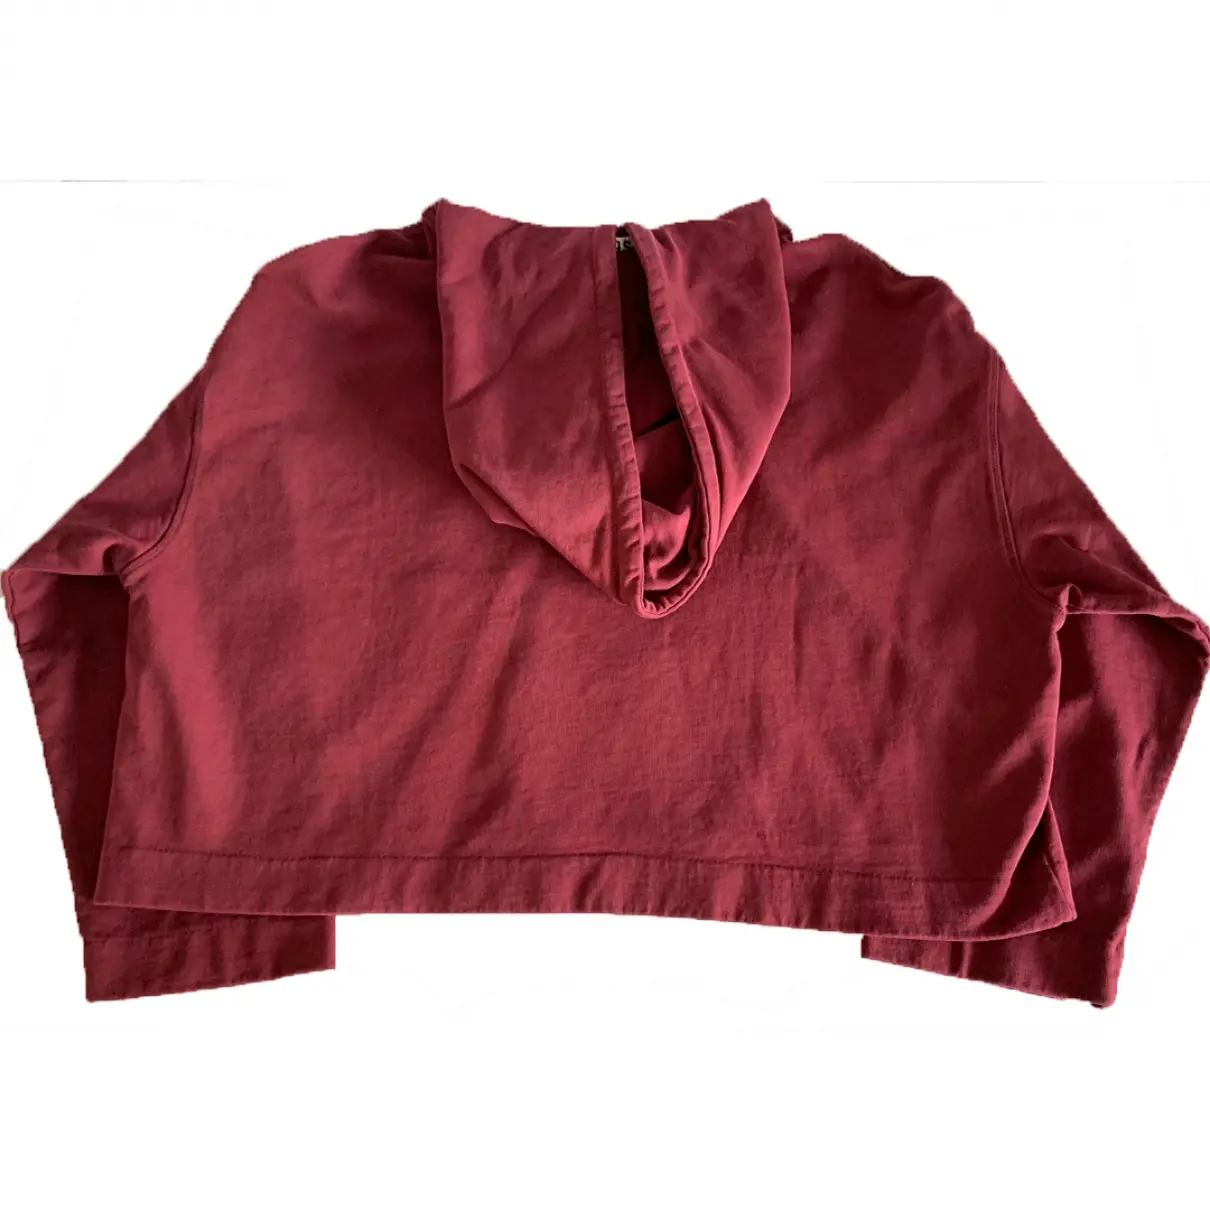 Buy Acne Studios Burgundy Cotton Knitwear online